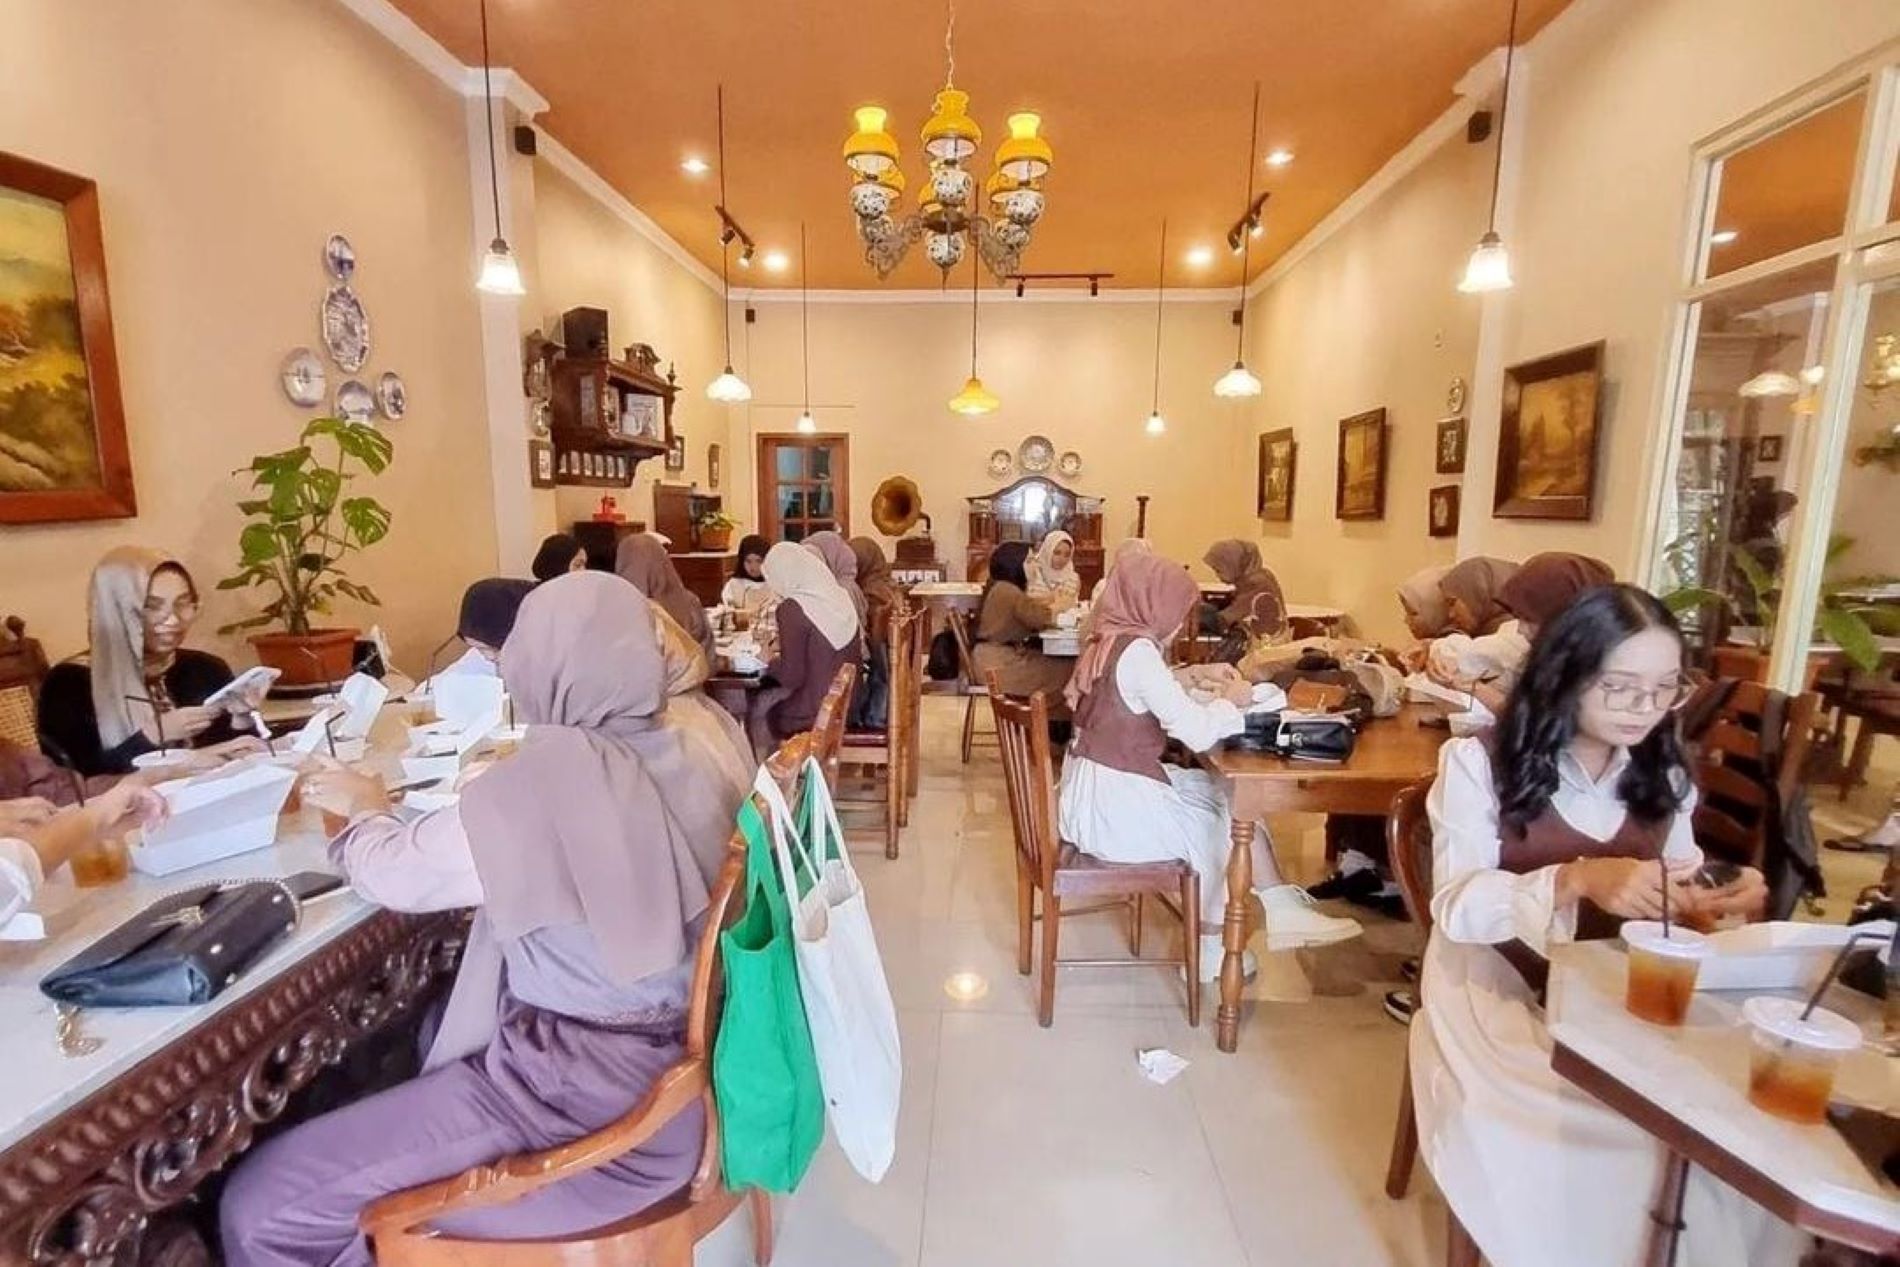 Indoor Imah Nini Vintage Cafe and Garden Resto/Instagram/imahnini